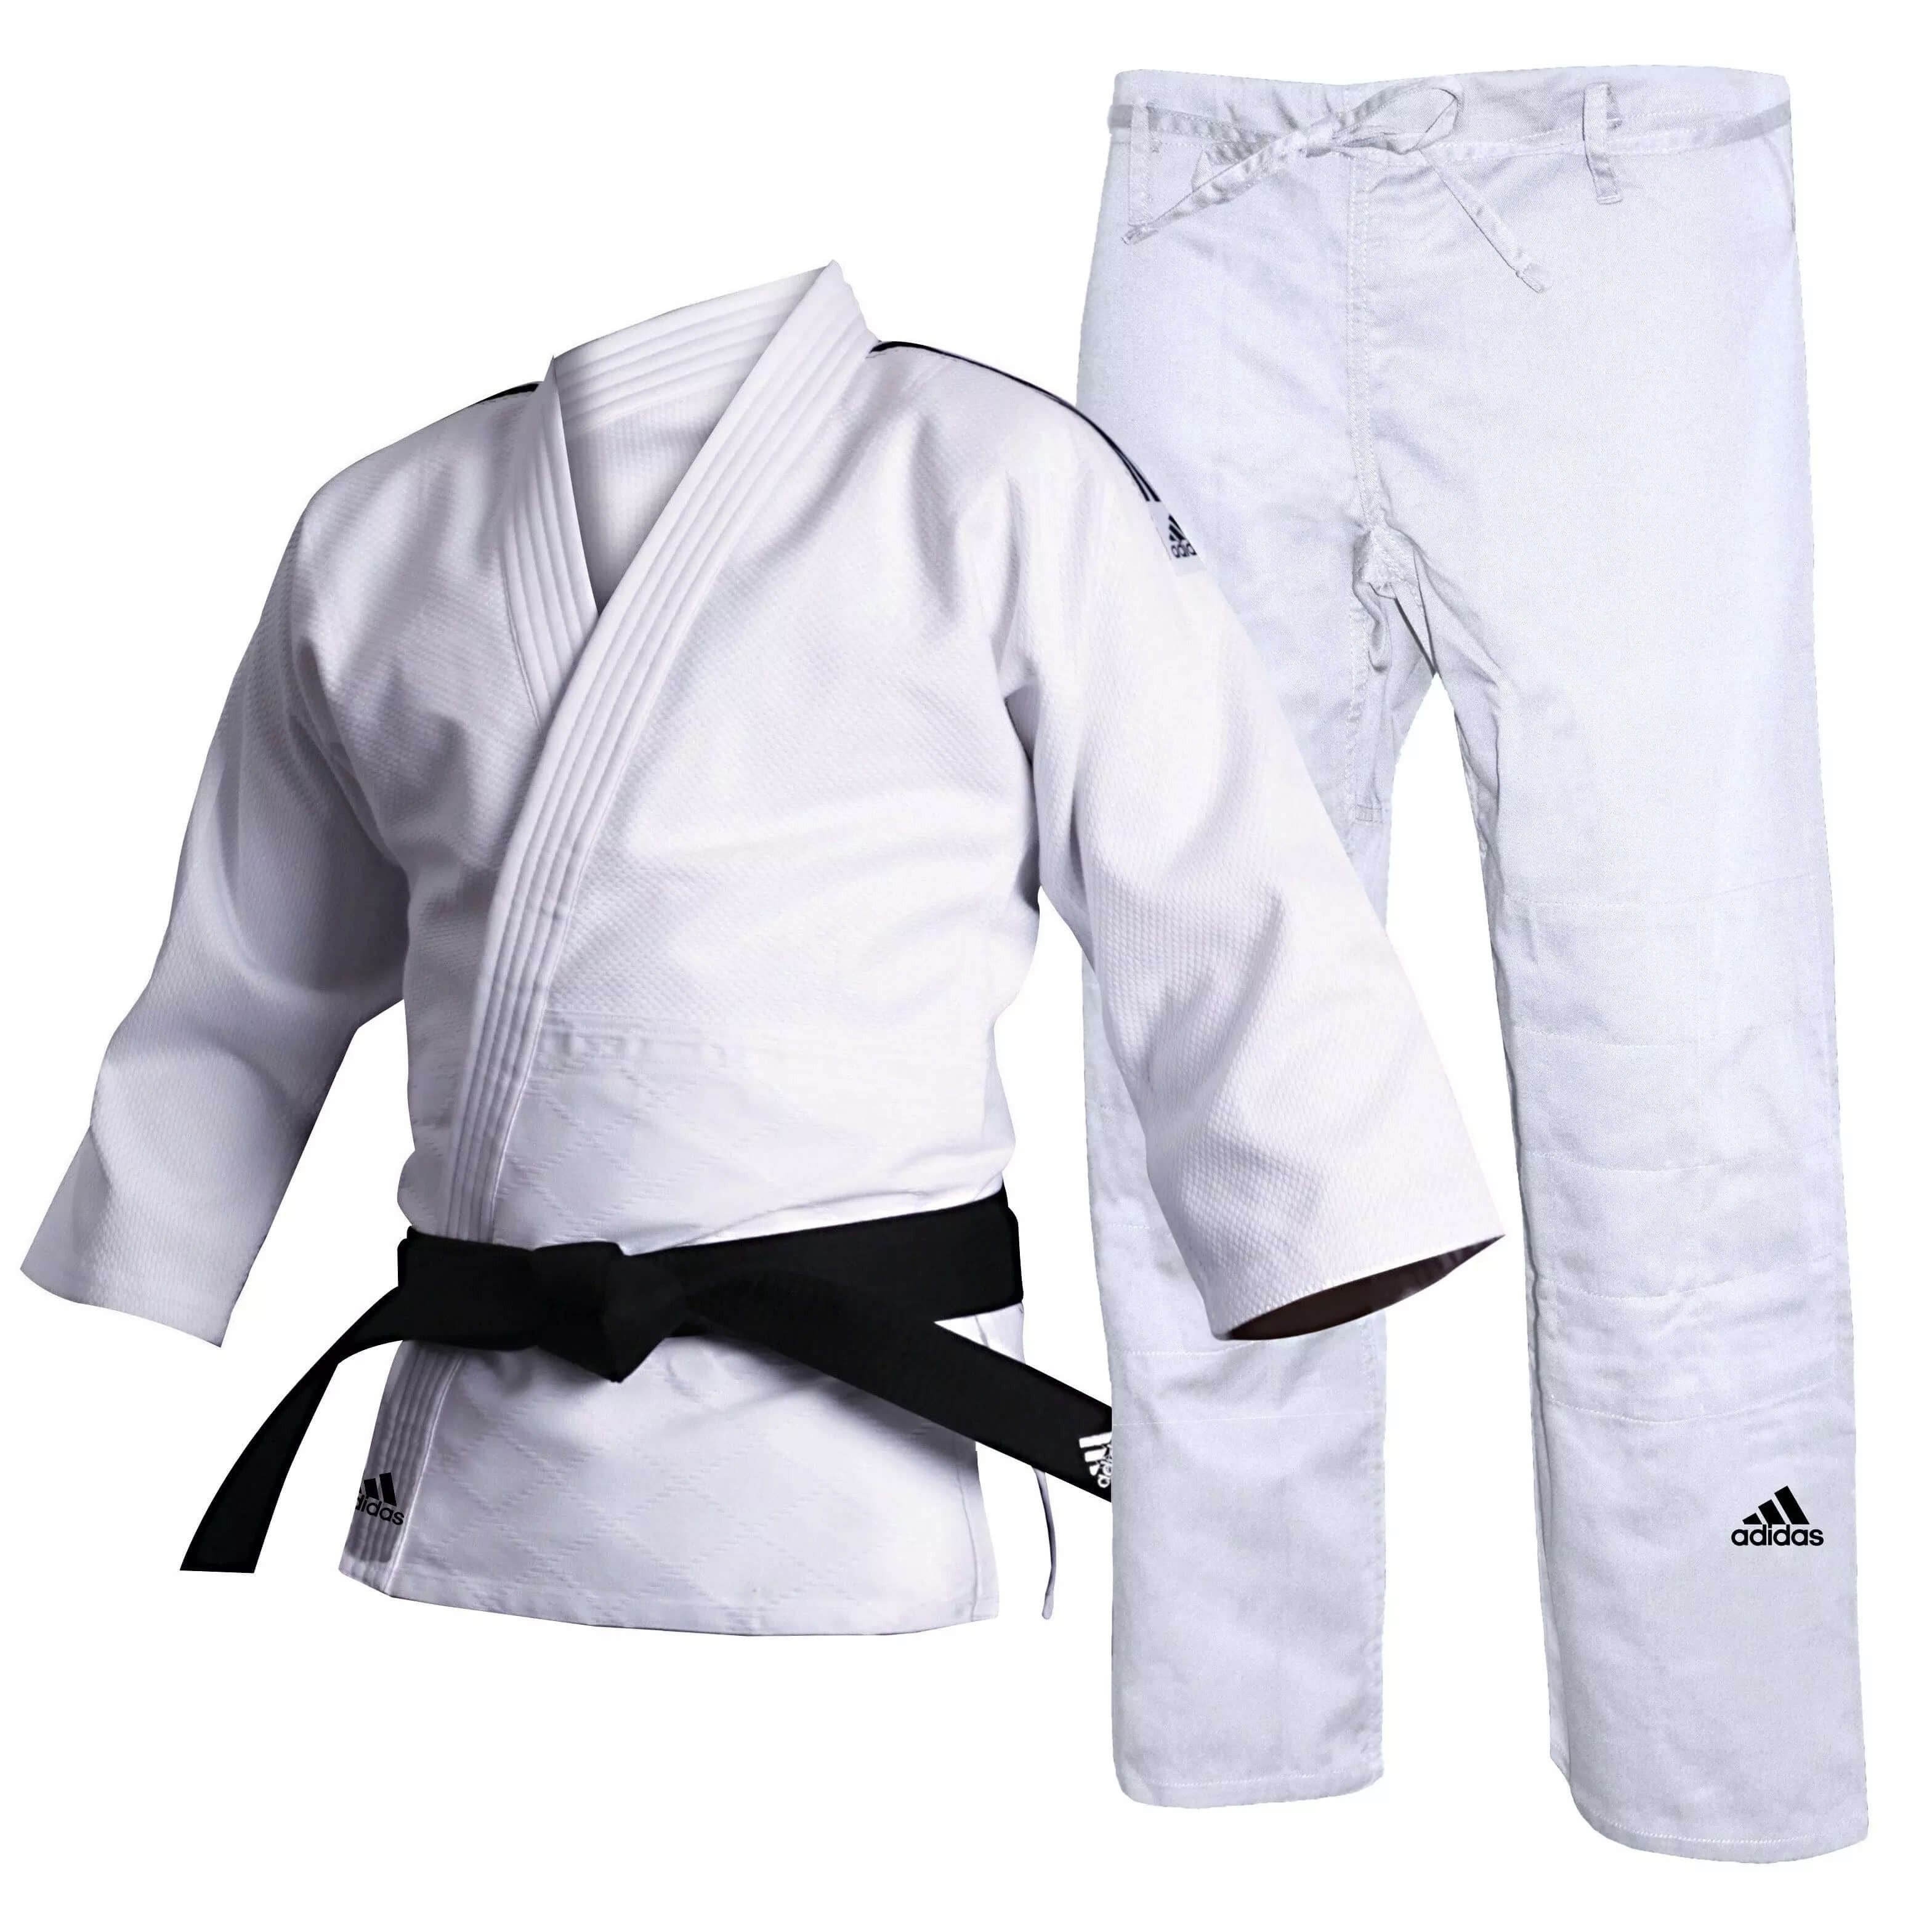 adidas Champion 2 IJF Judogi White